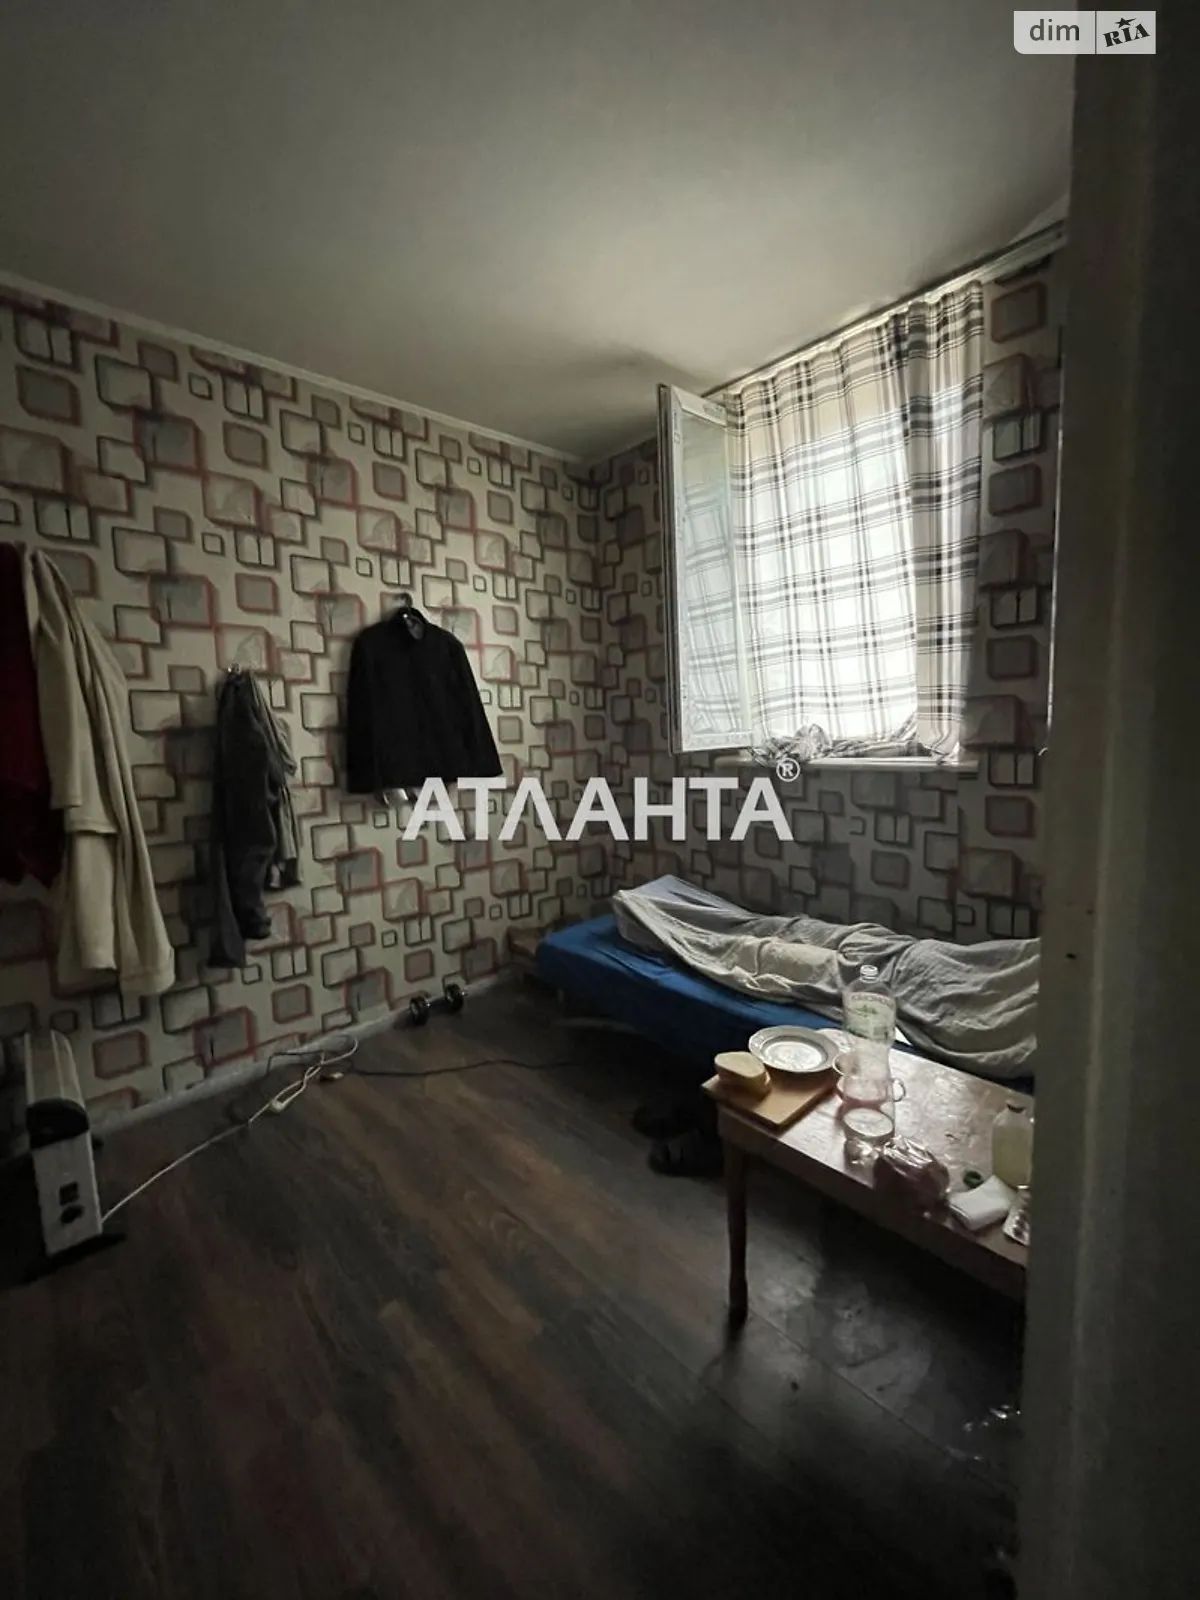 Продается комната 30 кв. м в Одессе, цена: 15500 $ - фото 1